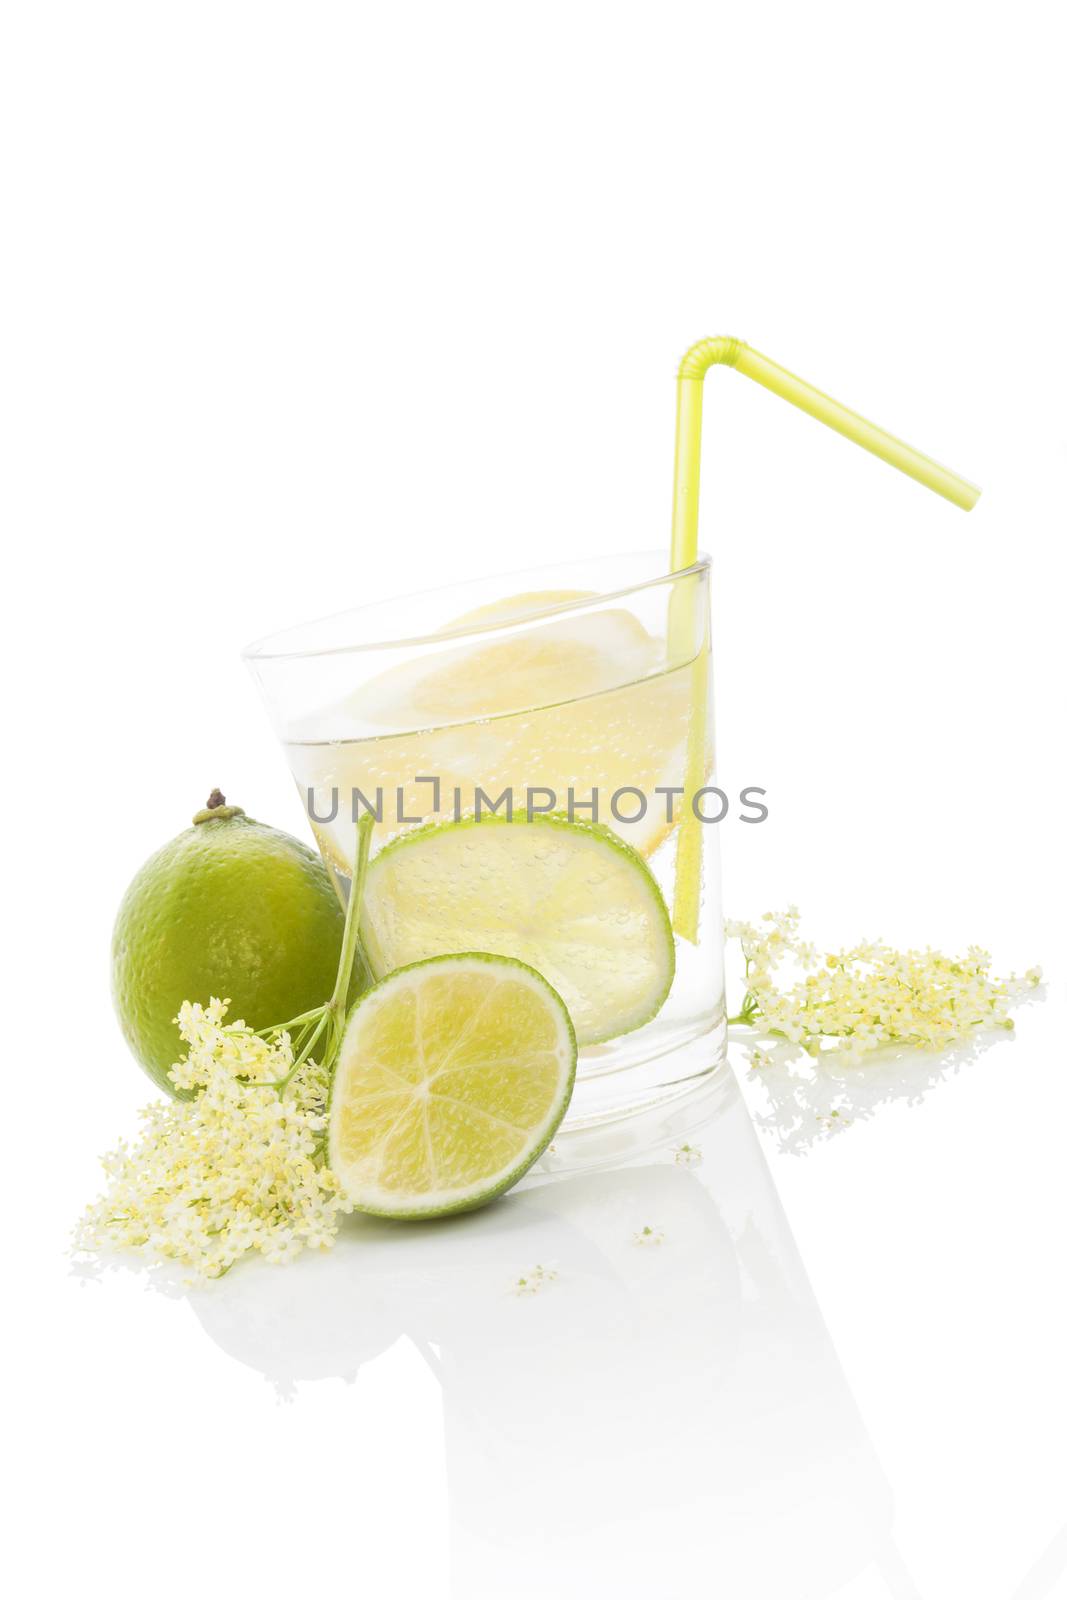 Homemade lemonade. by eskymaks